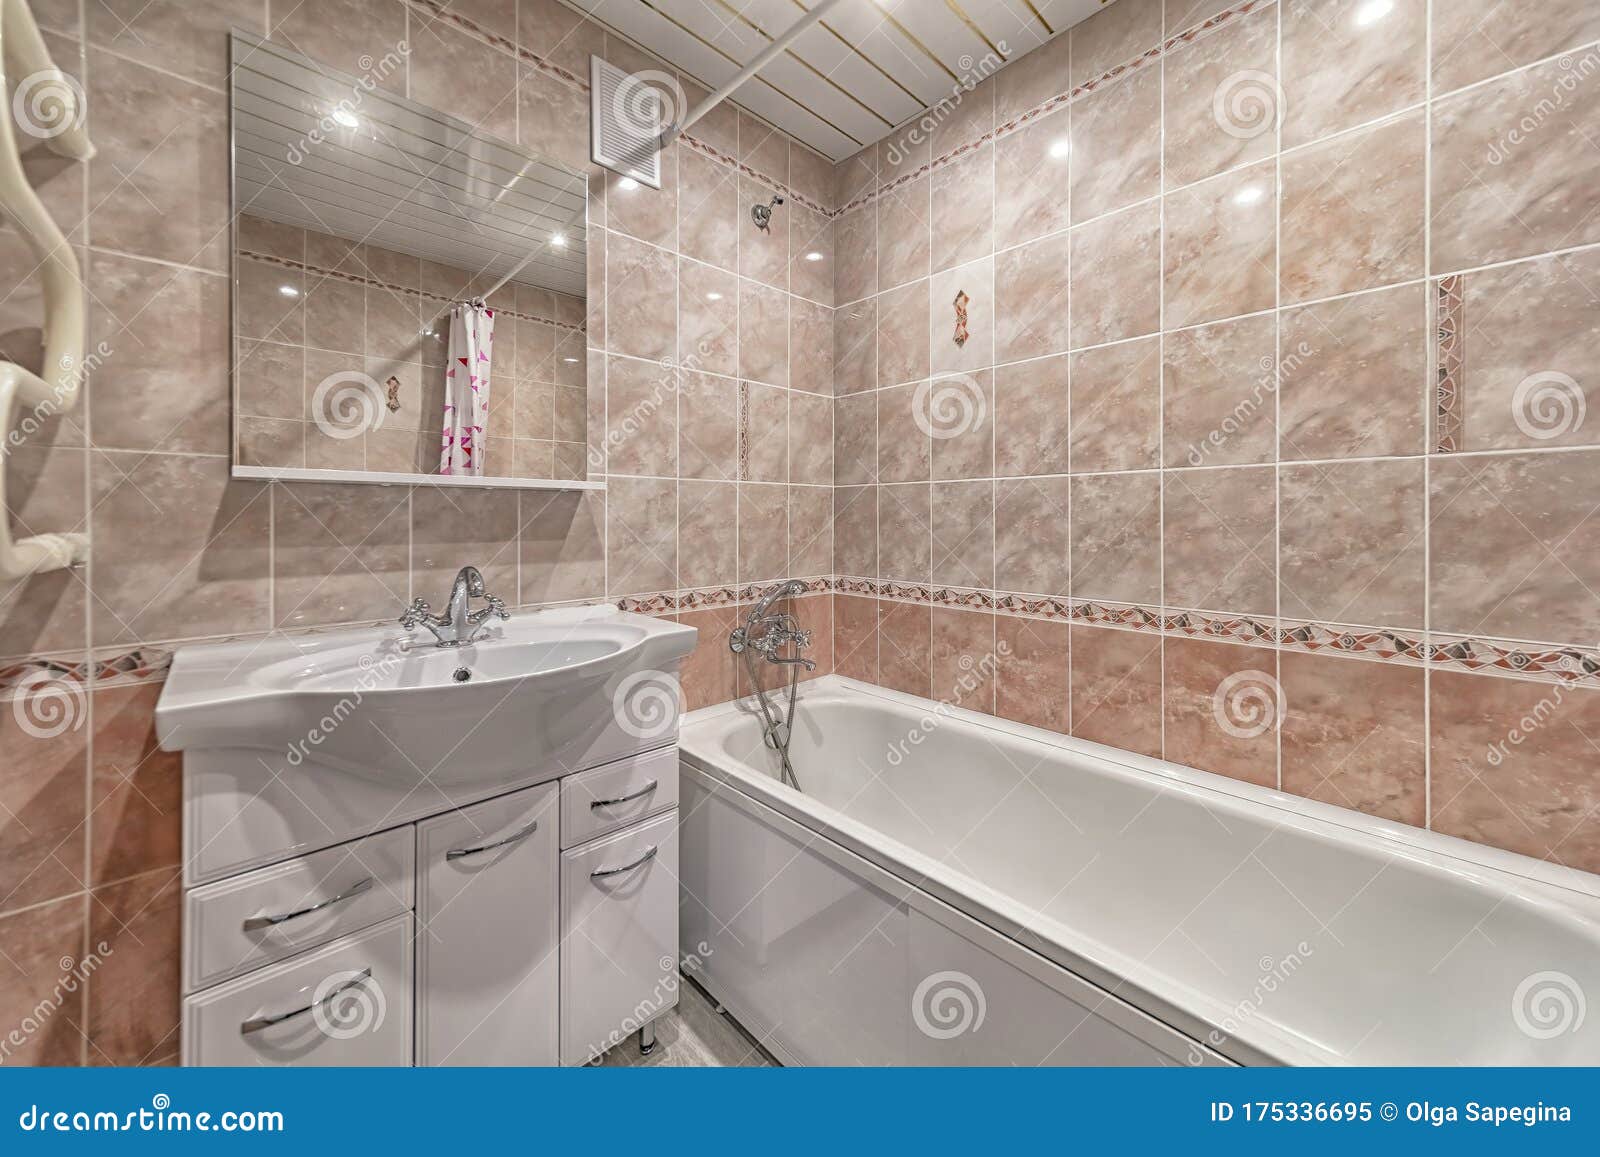 Small Beige  Tile Bathroom  With Bath Tube  Stock Image 